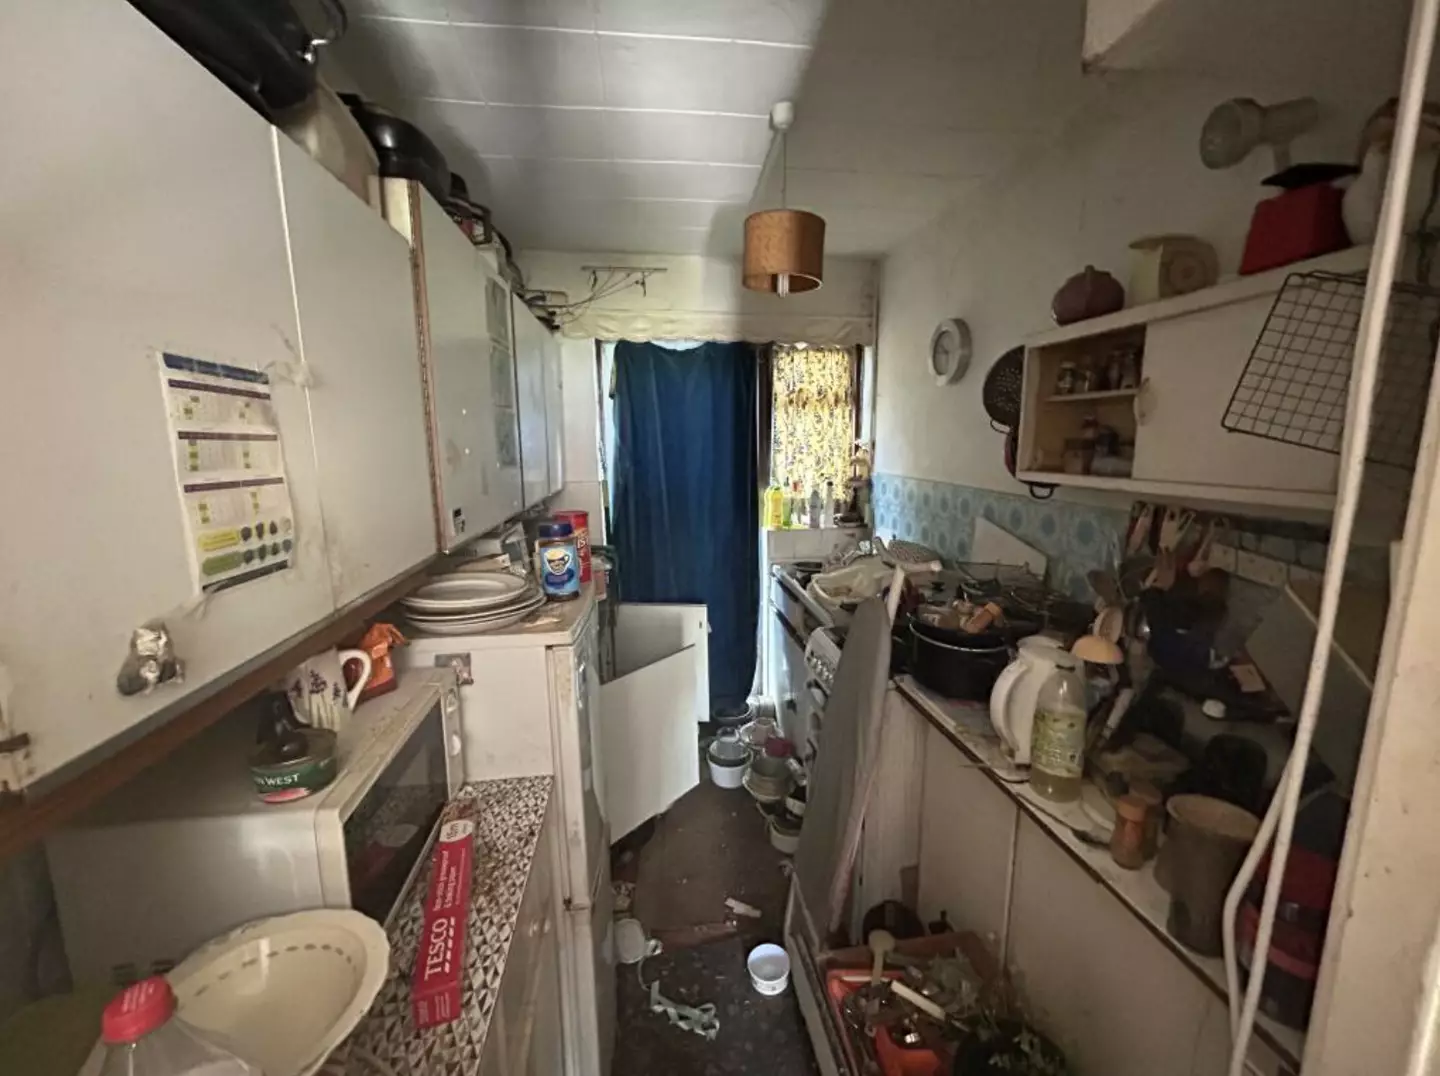 The kitchen looks filthy (Jam Press/Allsop)